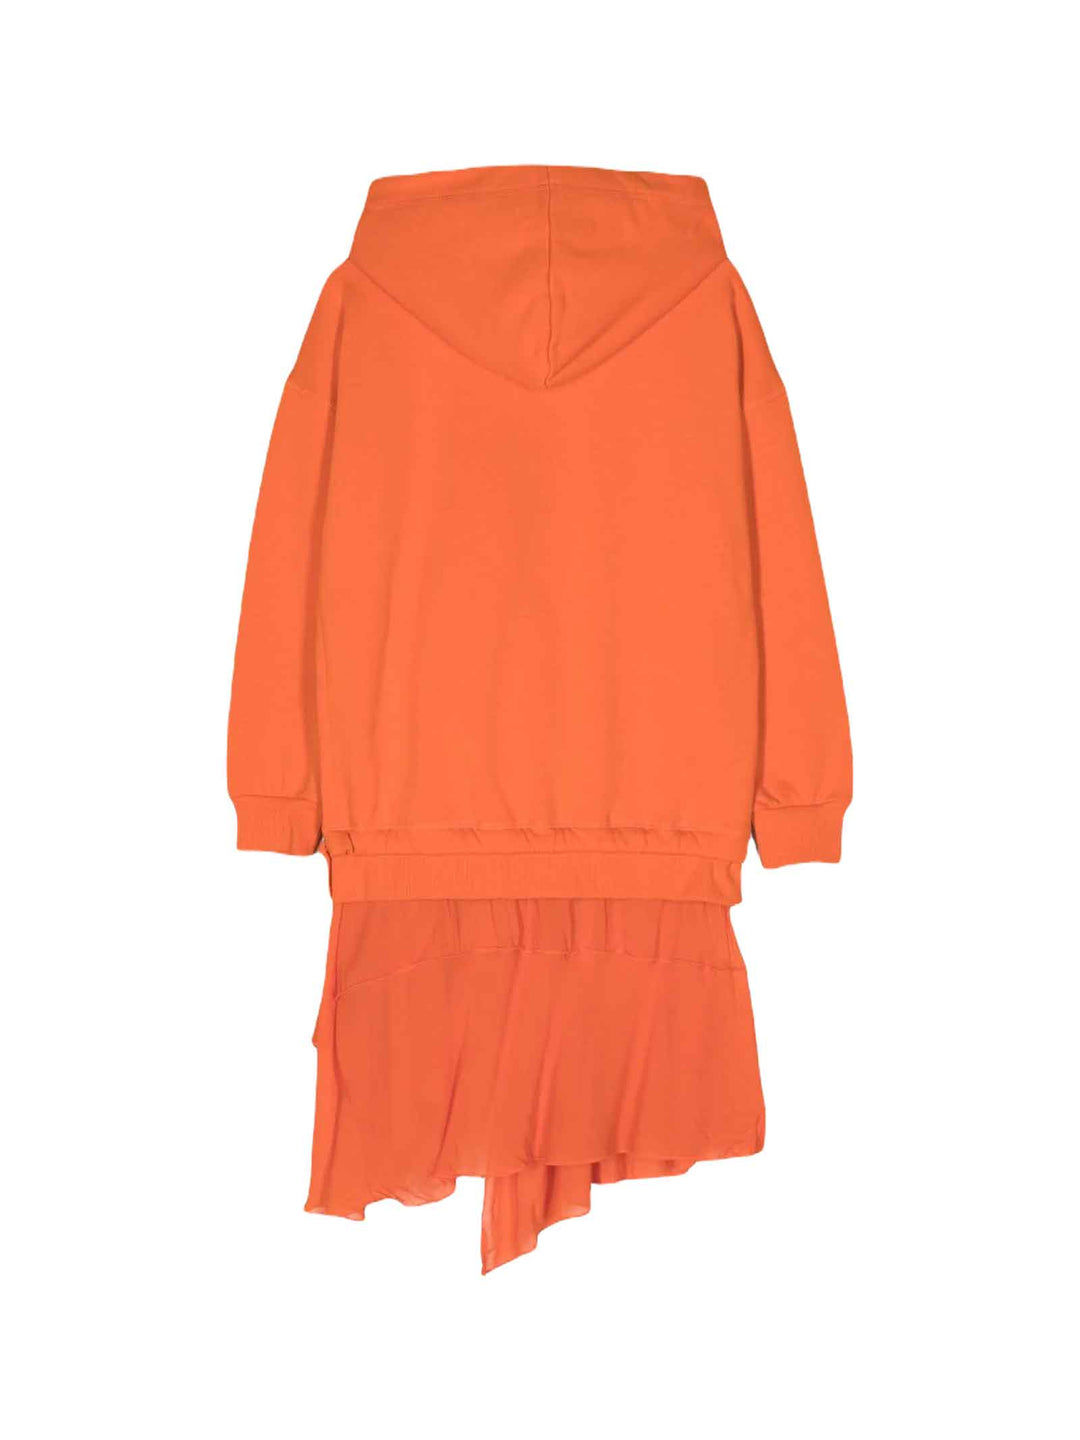 Robe fille orange